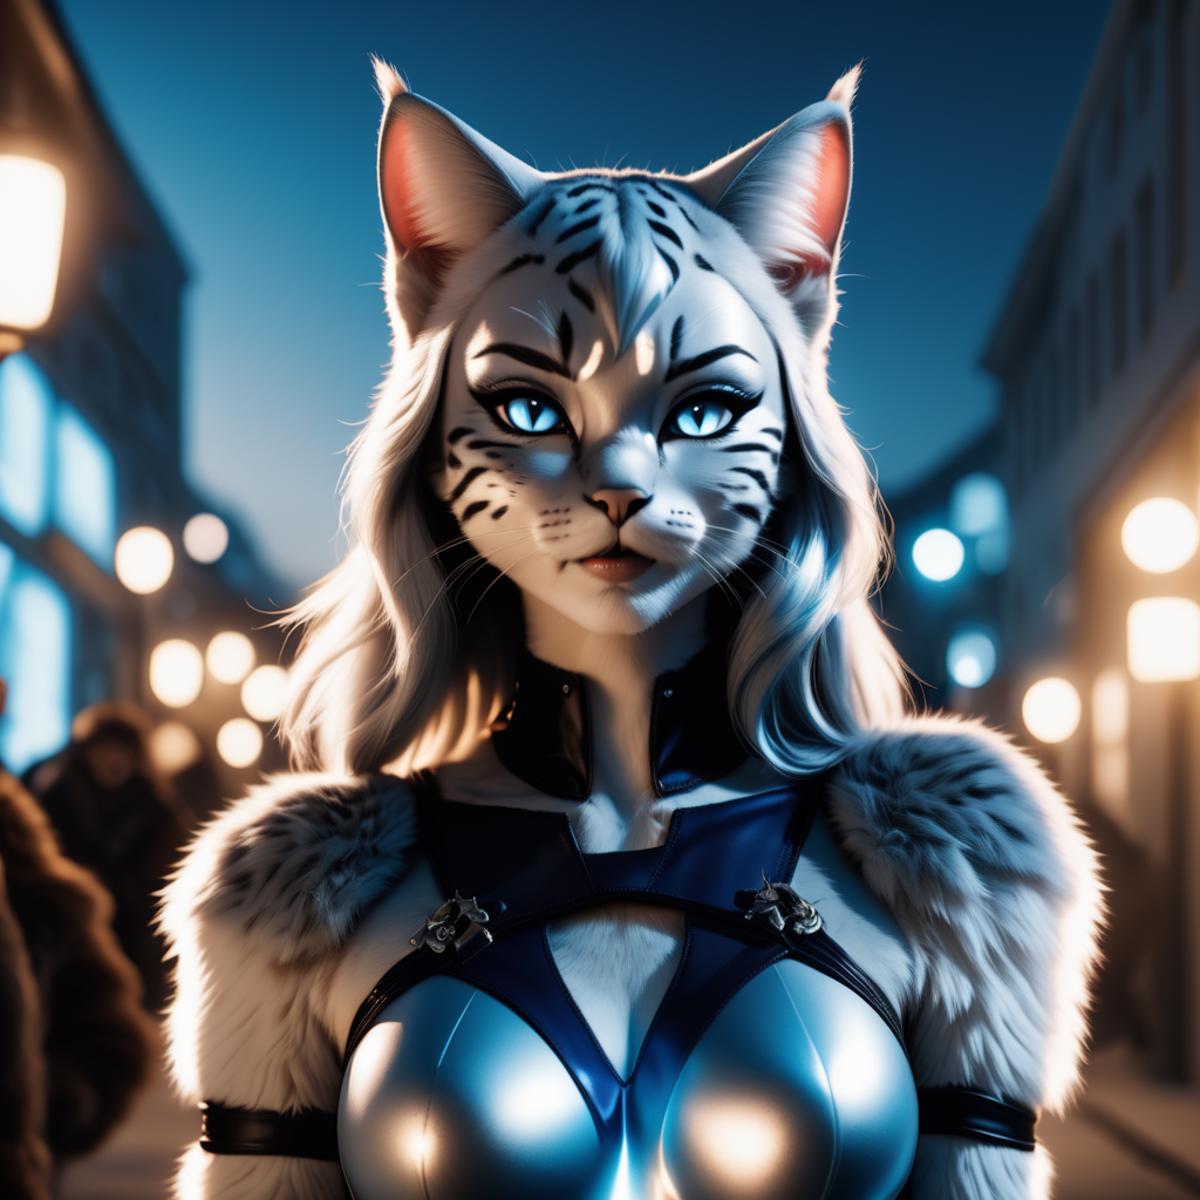 Realistic Feline Hybrids - Cat People image by Viola